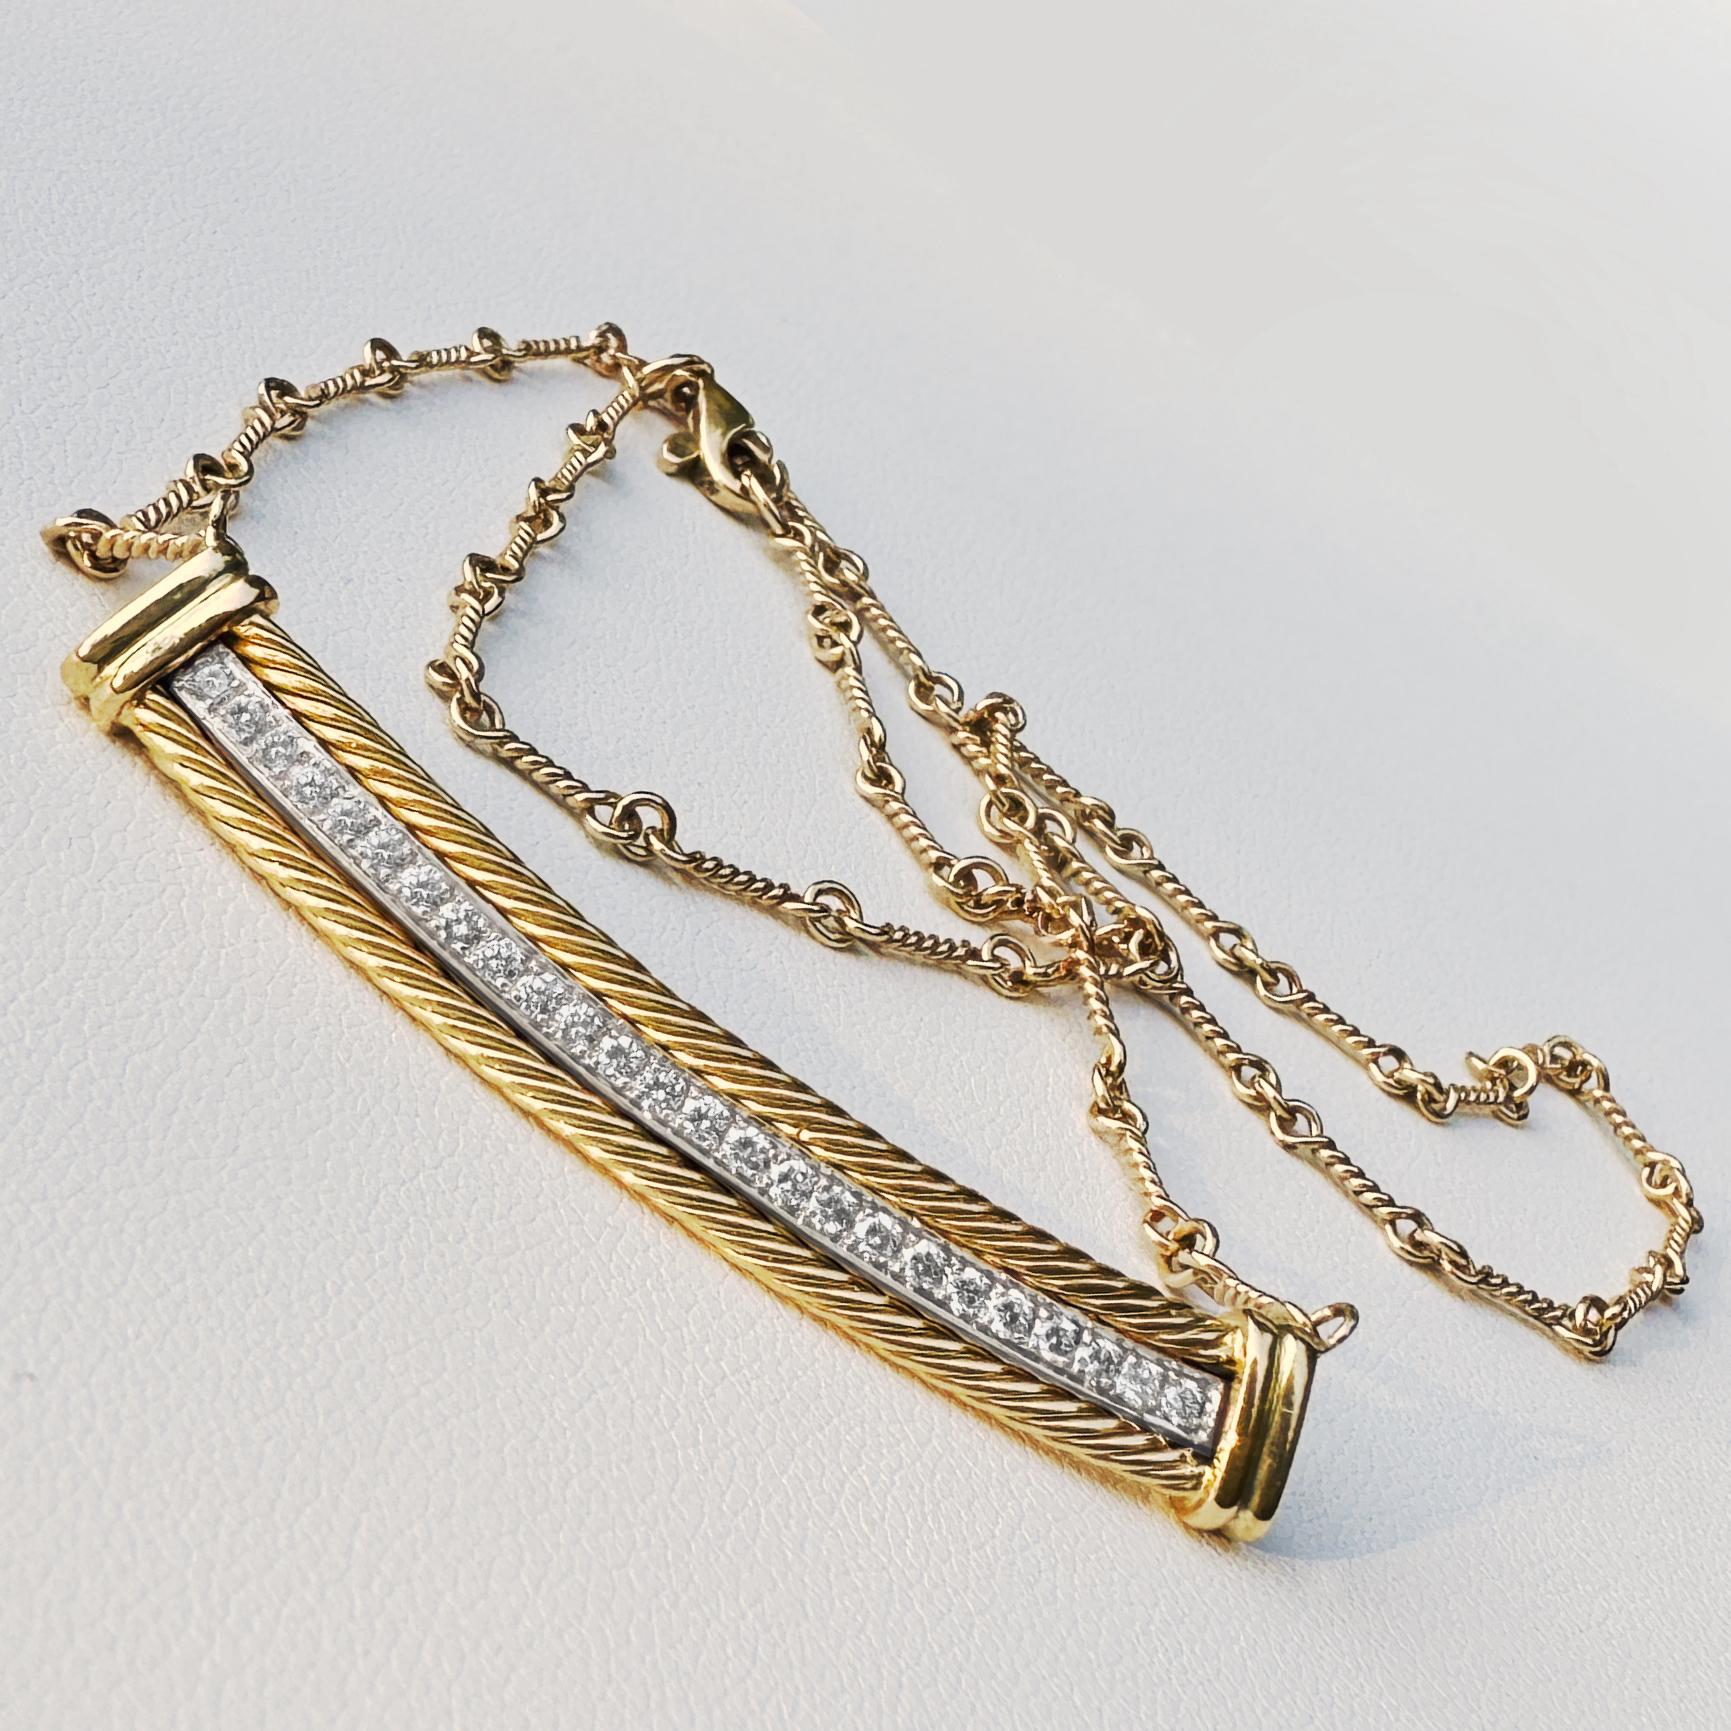 Brilliant Cut 0.25 Carat Diamond Bar Necklace in 18K Gold on Fancy 14K Gold Bar Chain